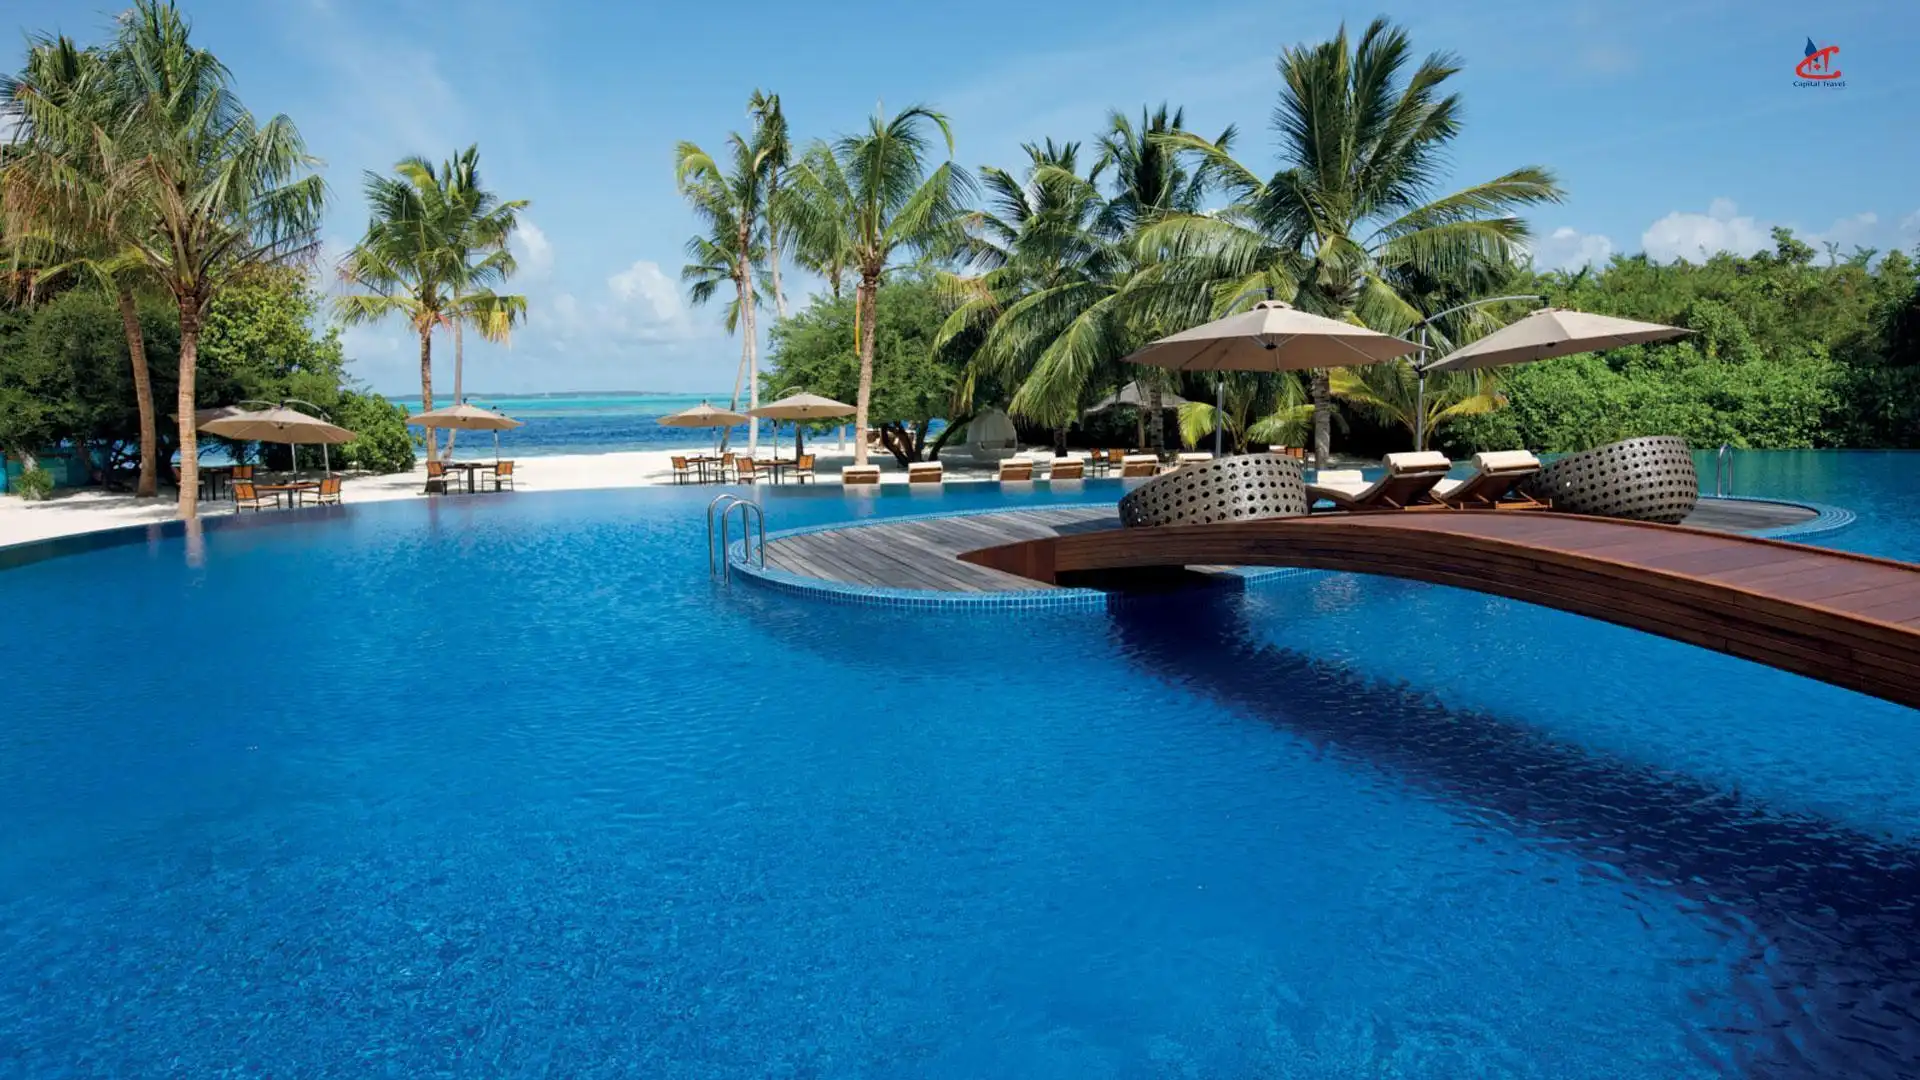 Hideaway Beach Resort & Spa Maldives island